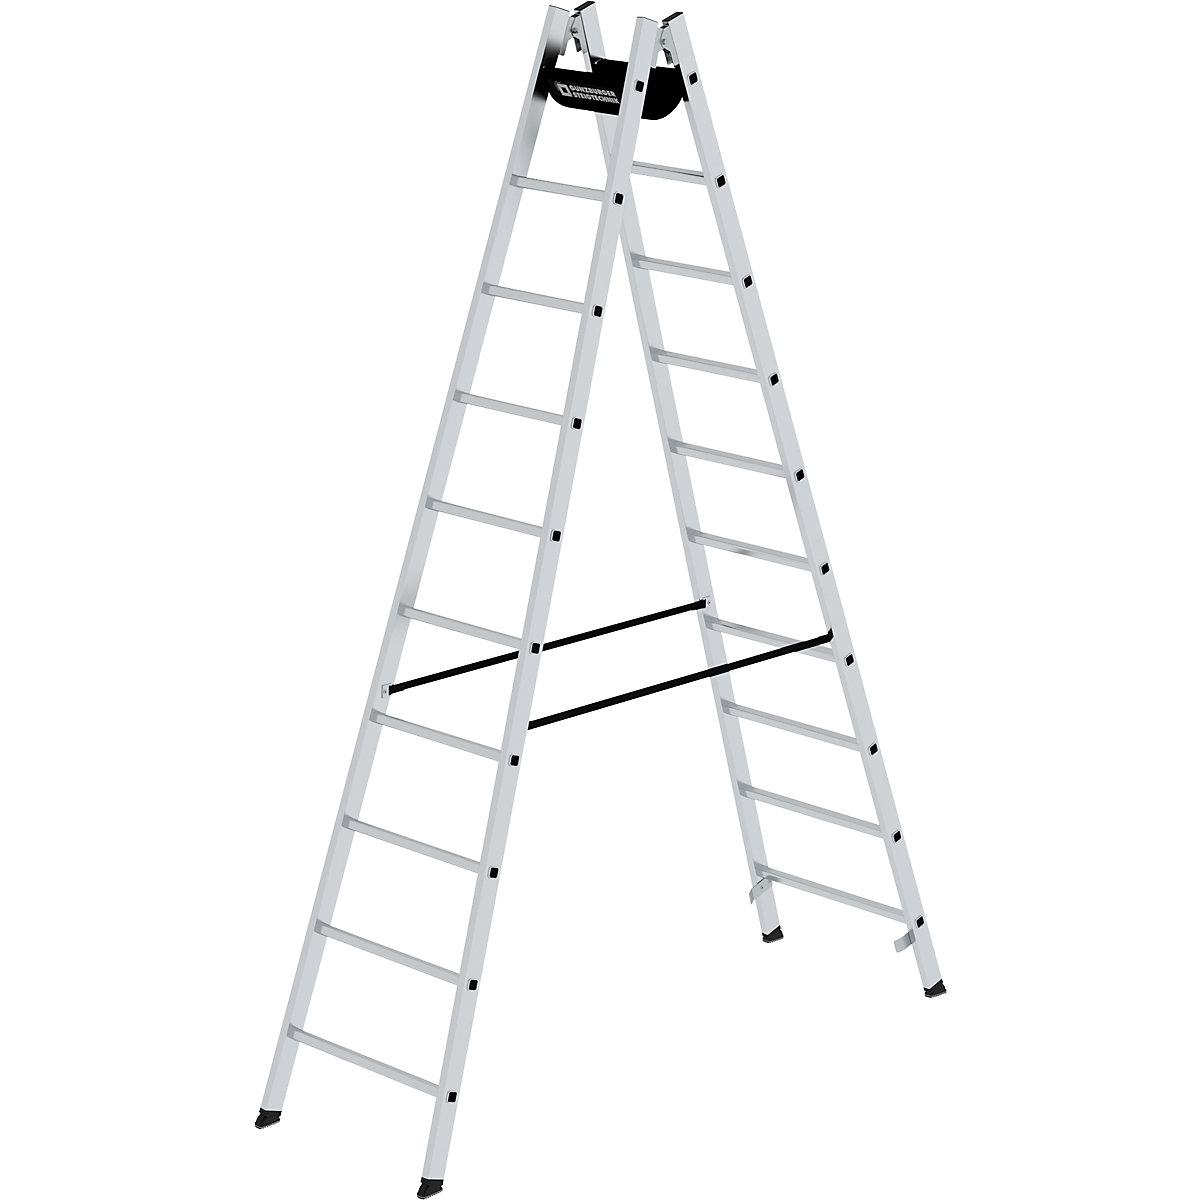 Safety rung ladder, double sided access – MUNK, rungs 30 x 30 mm, non-slip, 2 x 10 rungs-9